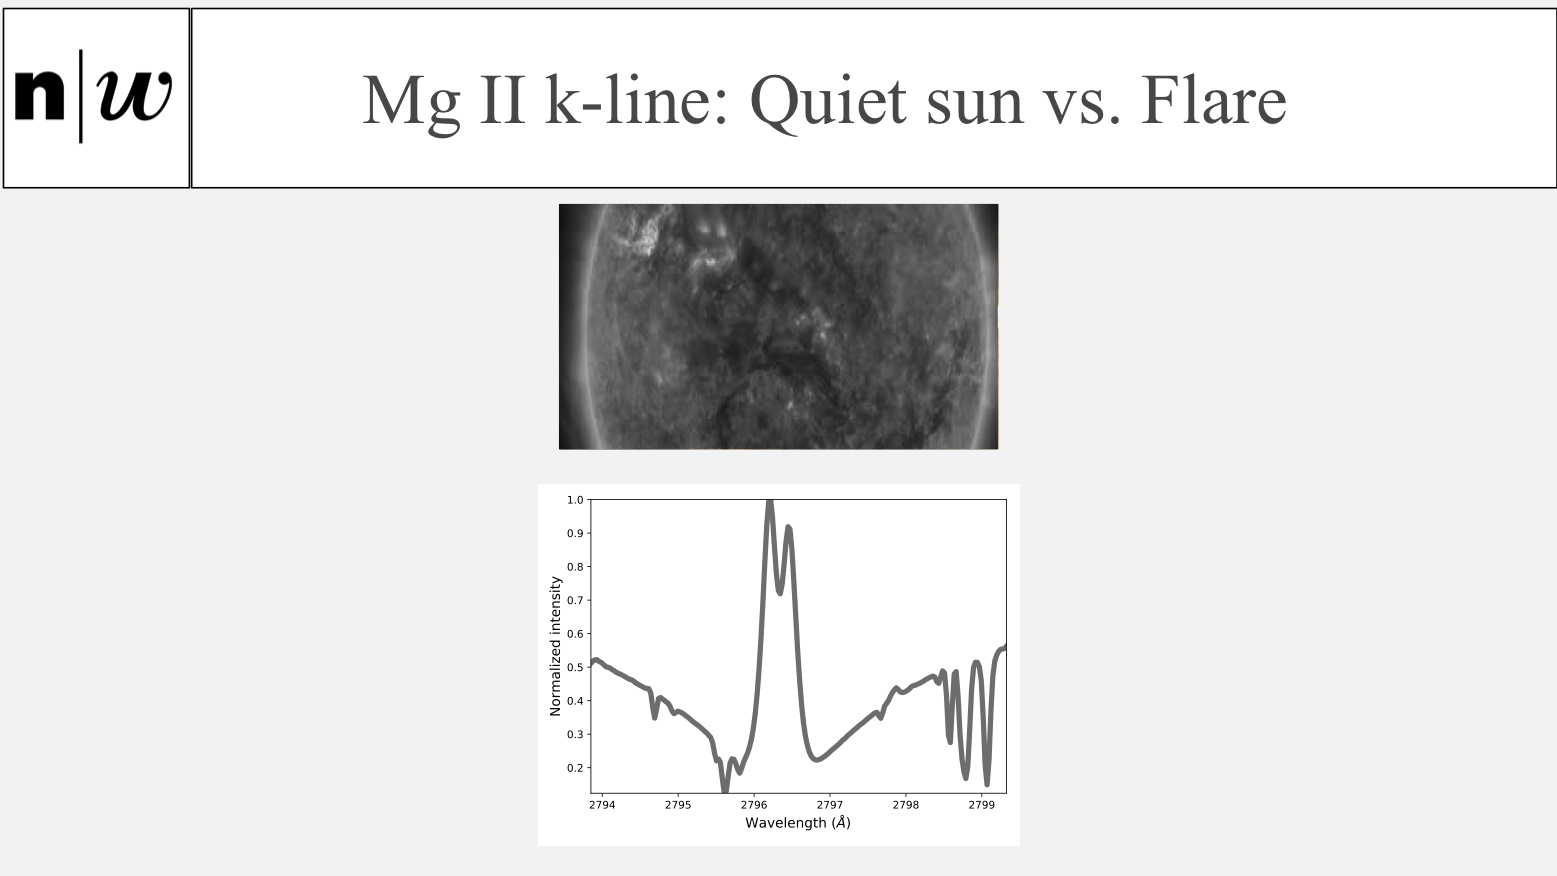 Mg II k-line: Quiet sun vs. Flare